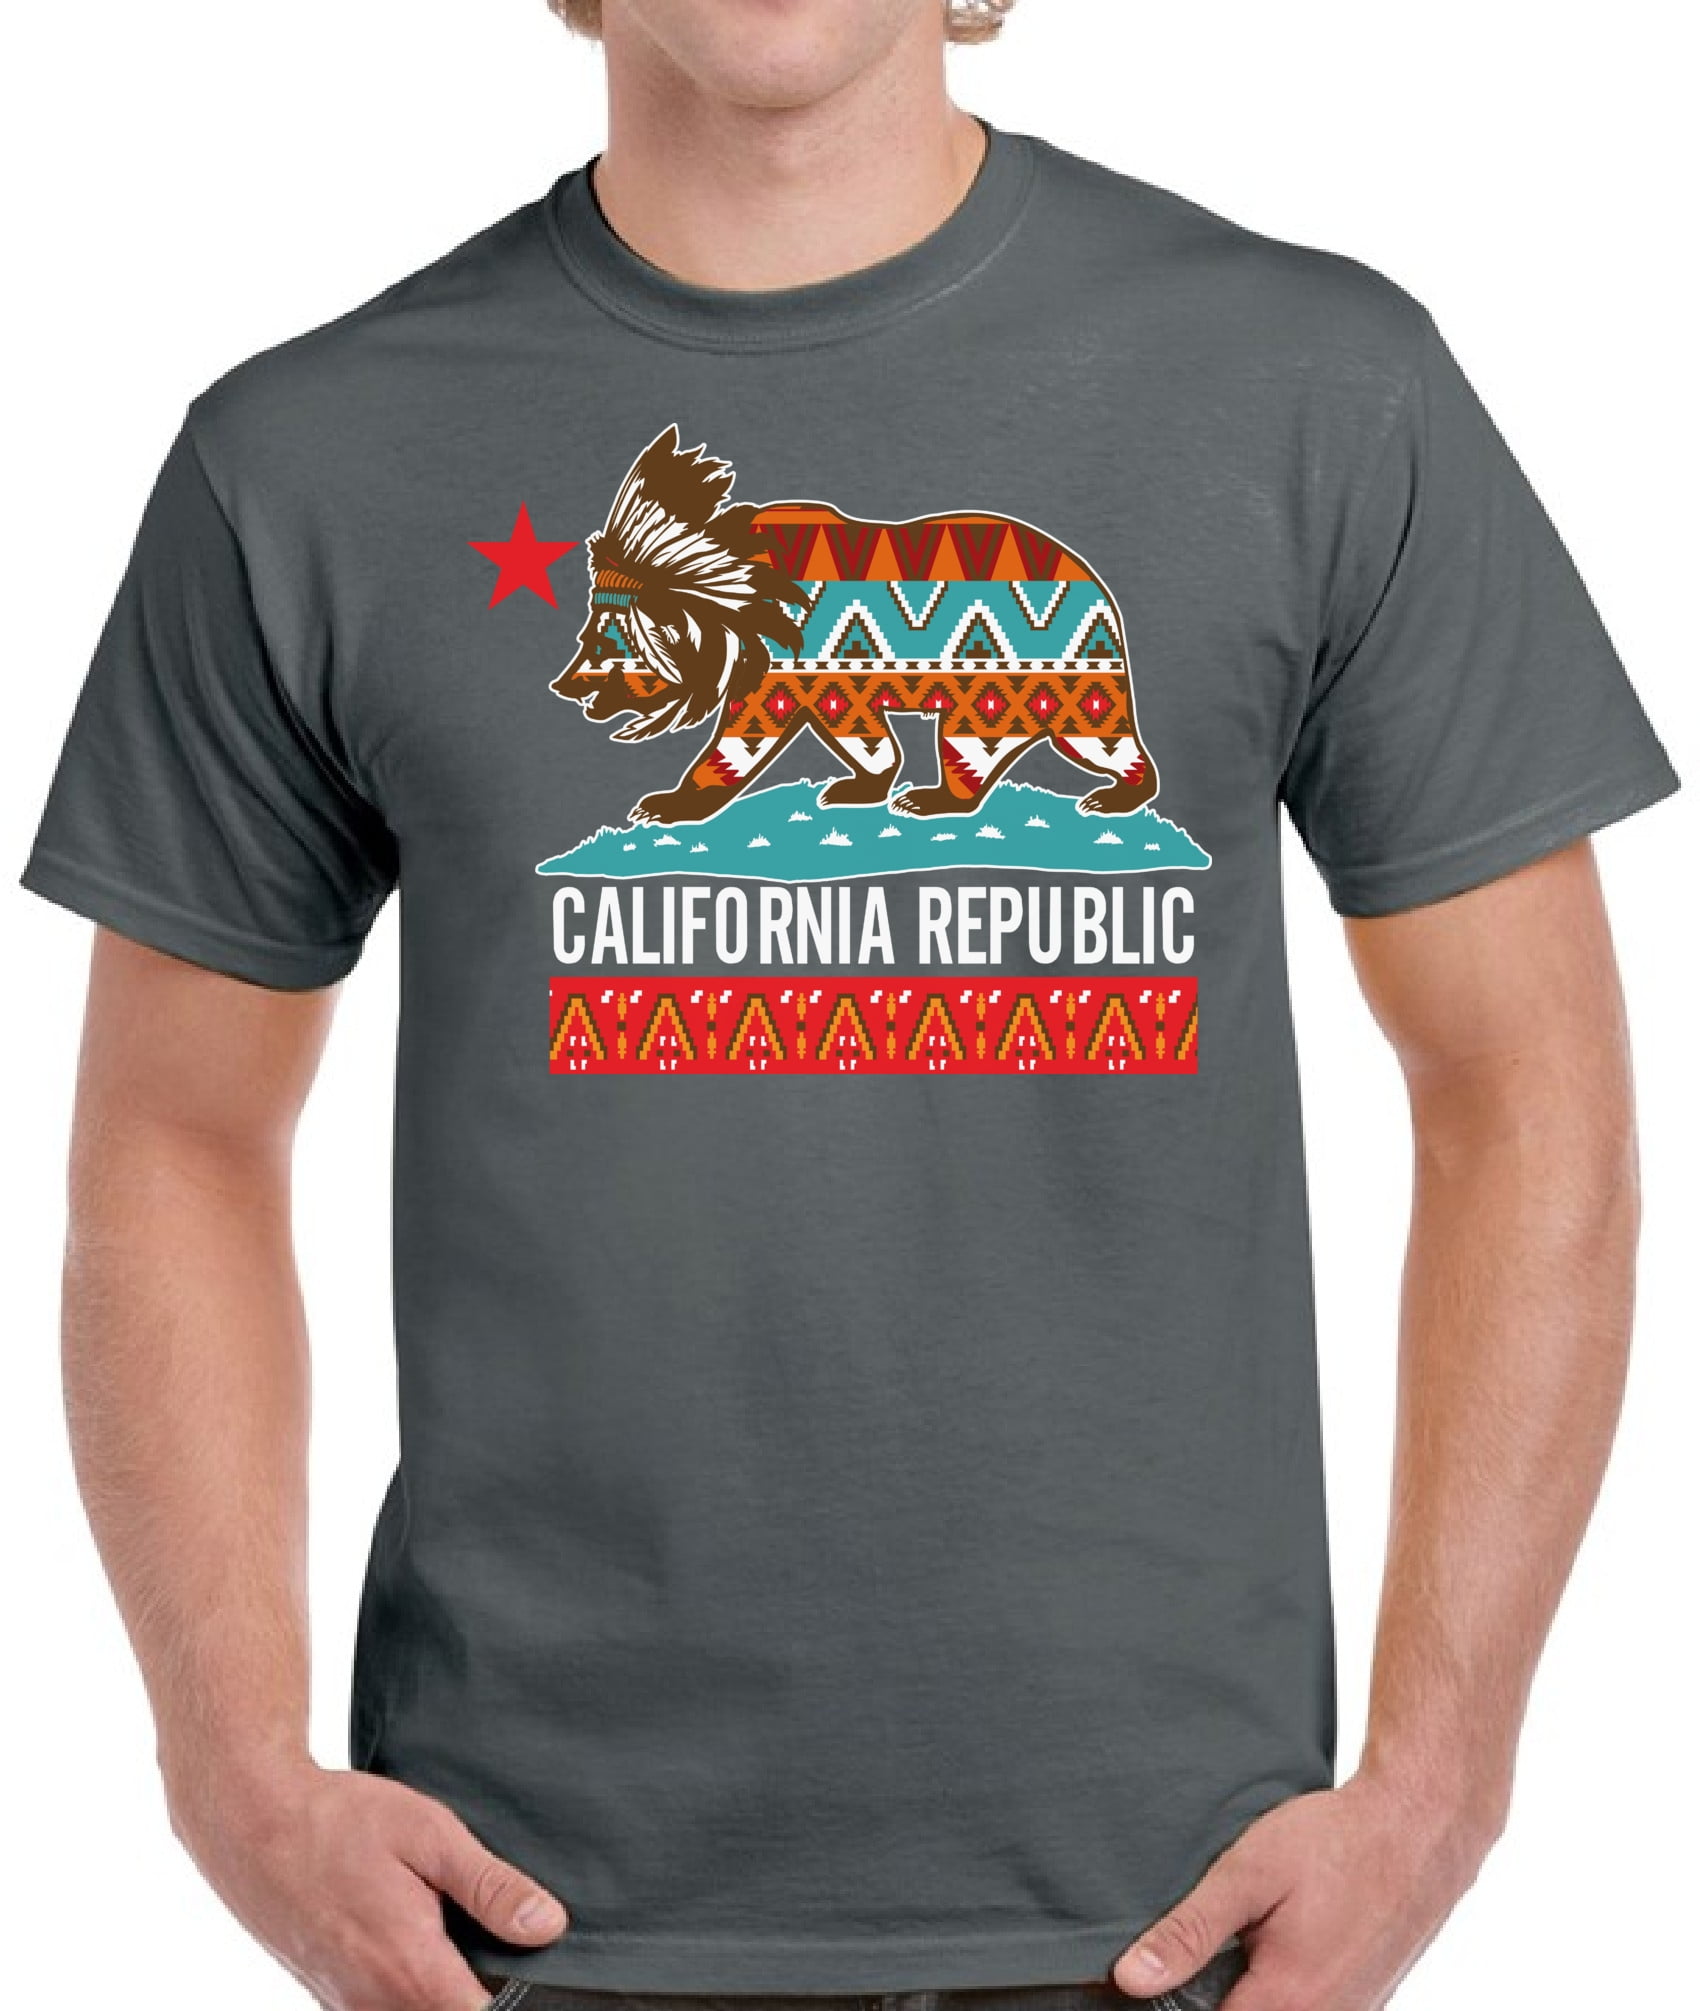 California Tribal Bear T-Shirt for Men - S M L XL 2XL 3XL 4XL 5XL USA State Graphic Tee - Funny Cali Gift for Men - Walmart.com